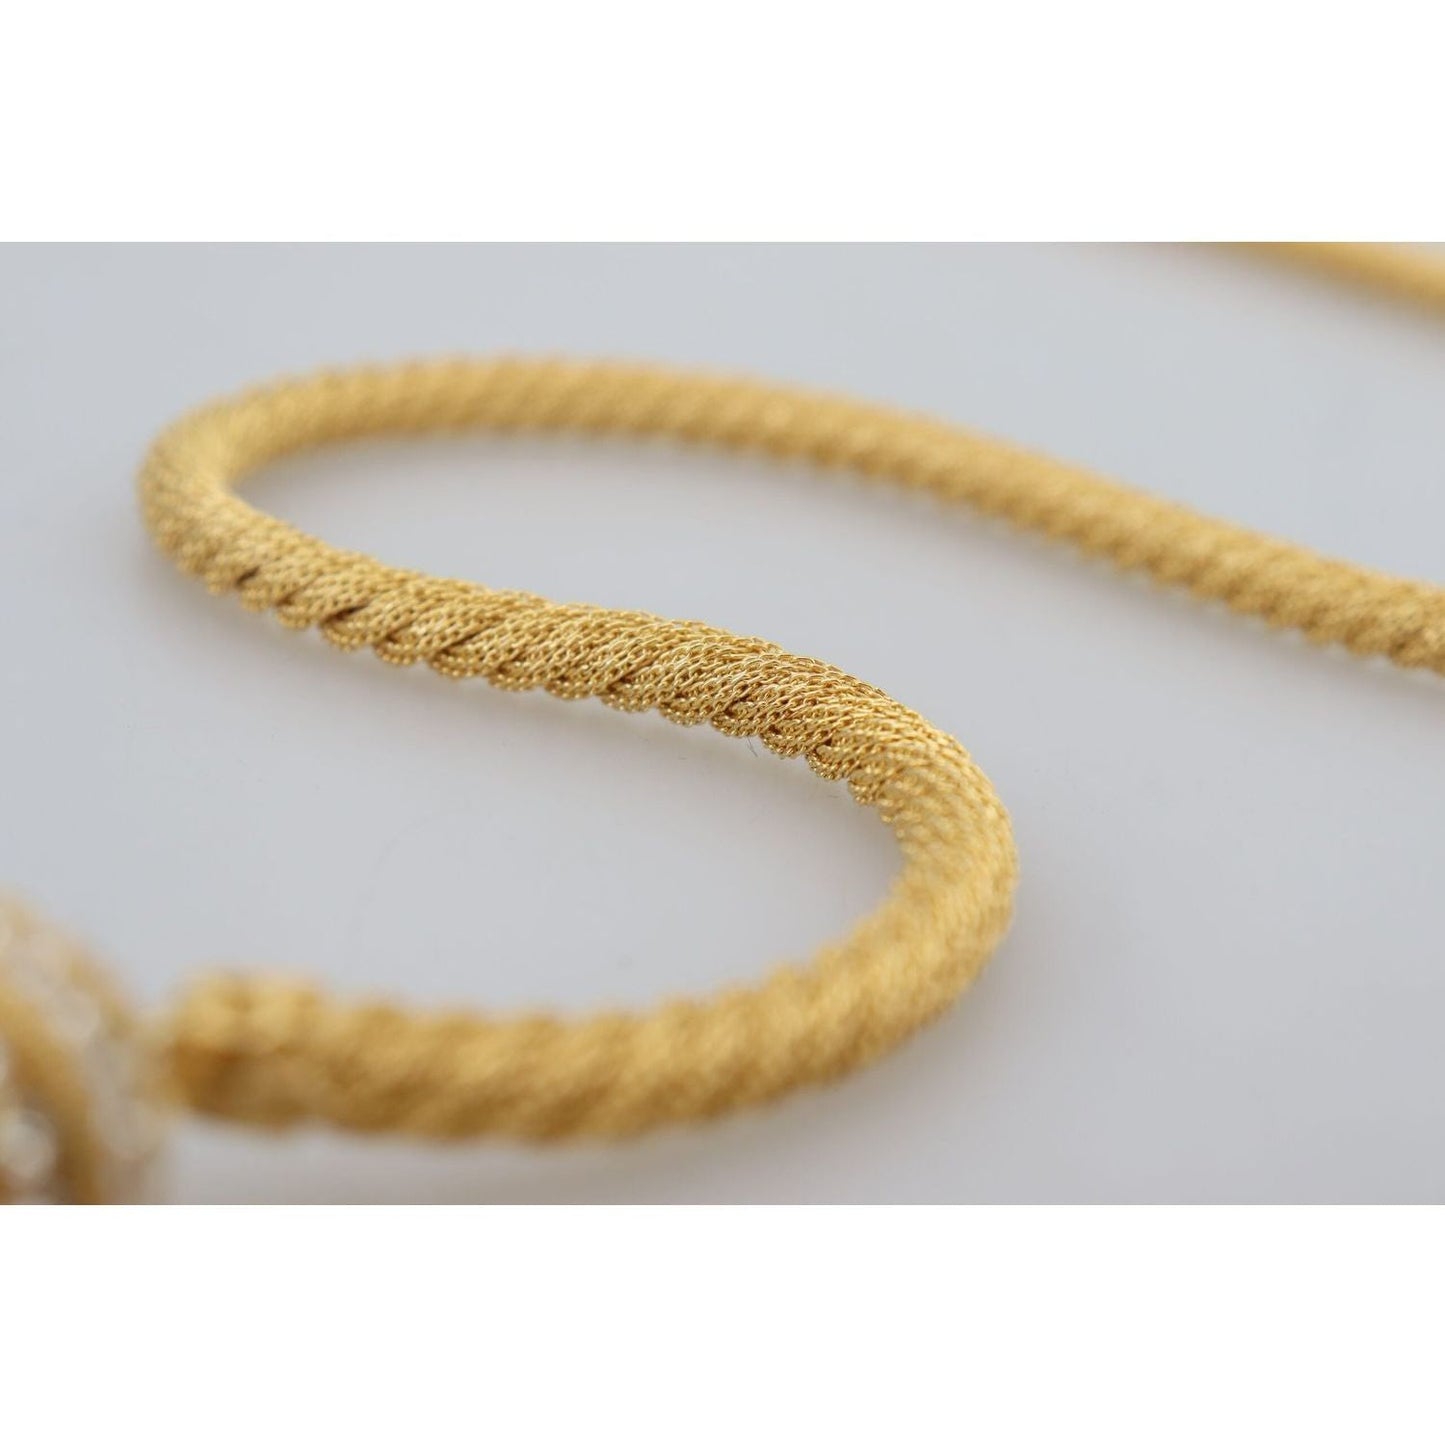 Dolce & Gabbana Elegant Gold Brass Pearl Statement Necklace gold-brass-sicily-crystal-robe-statement-necklace-1